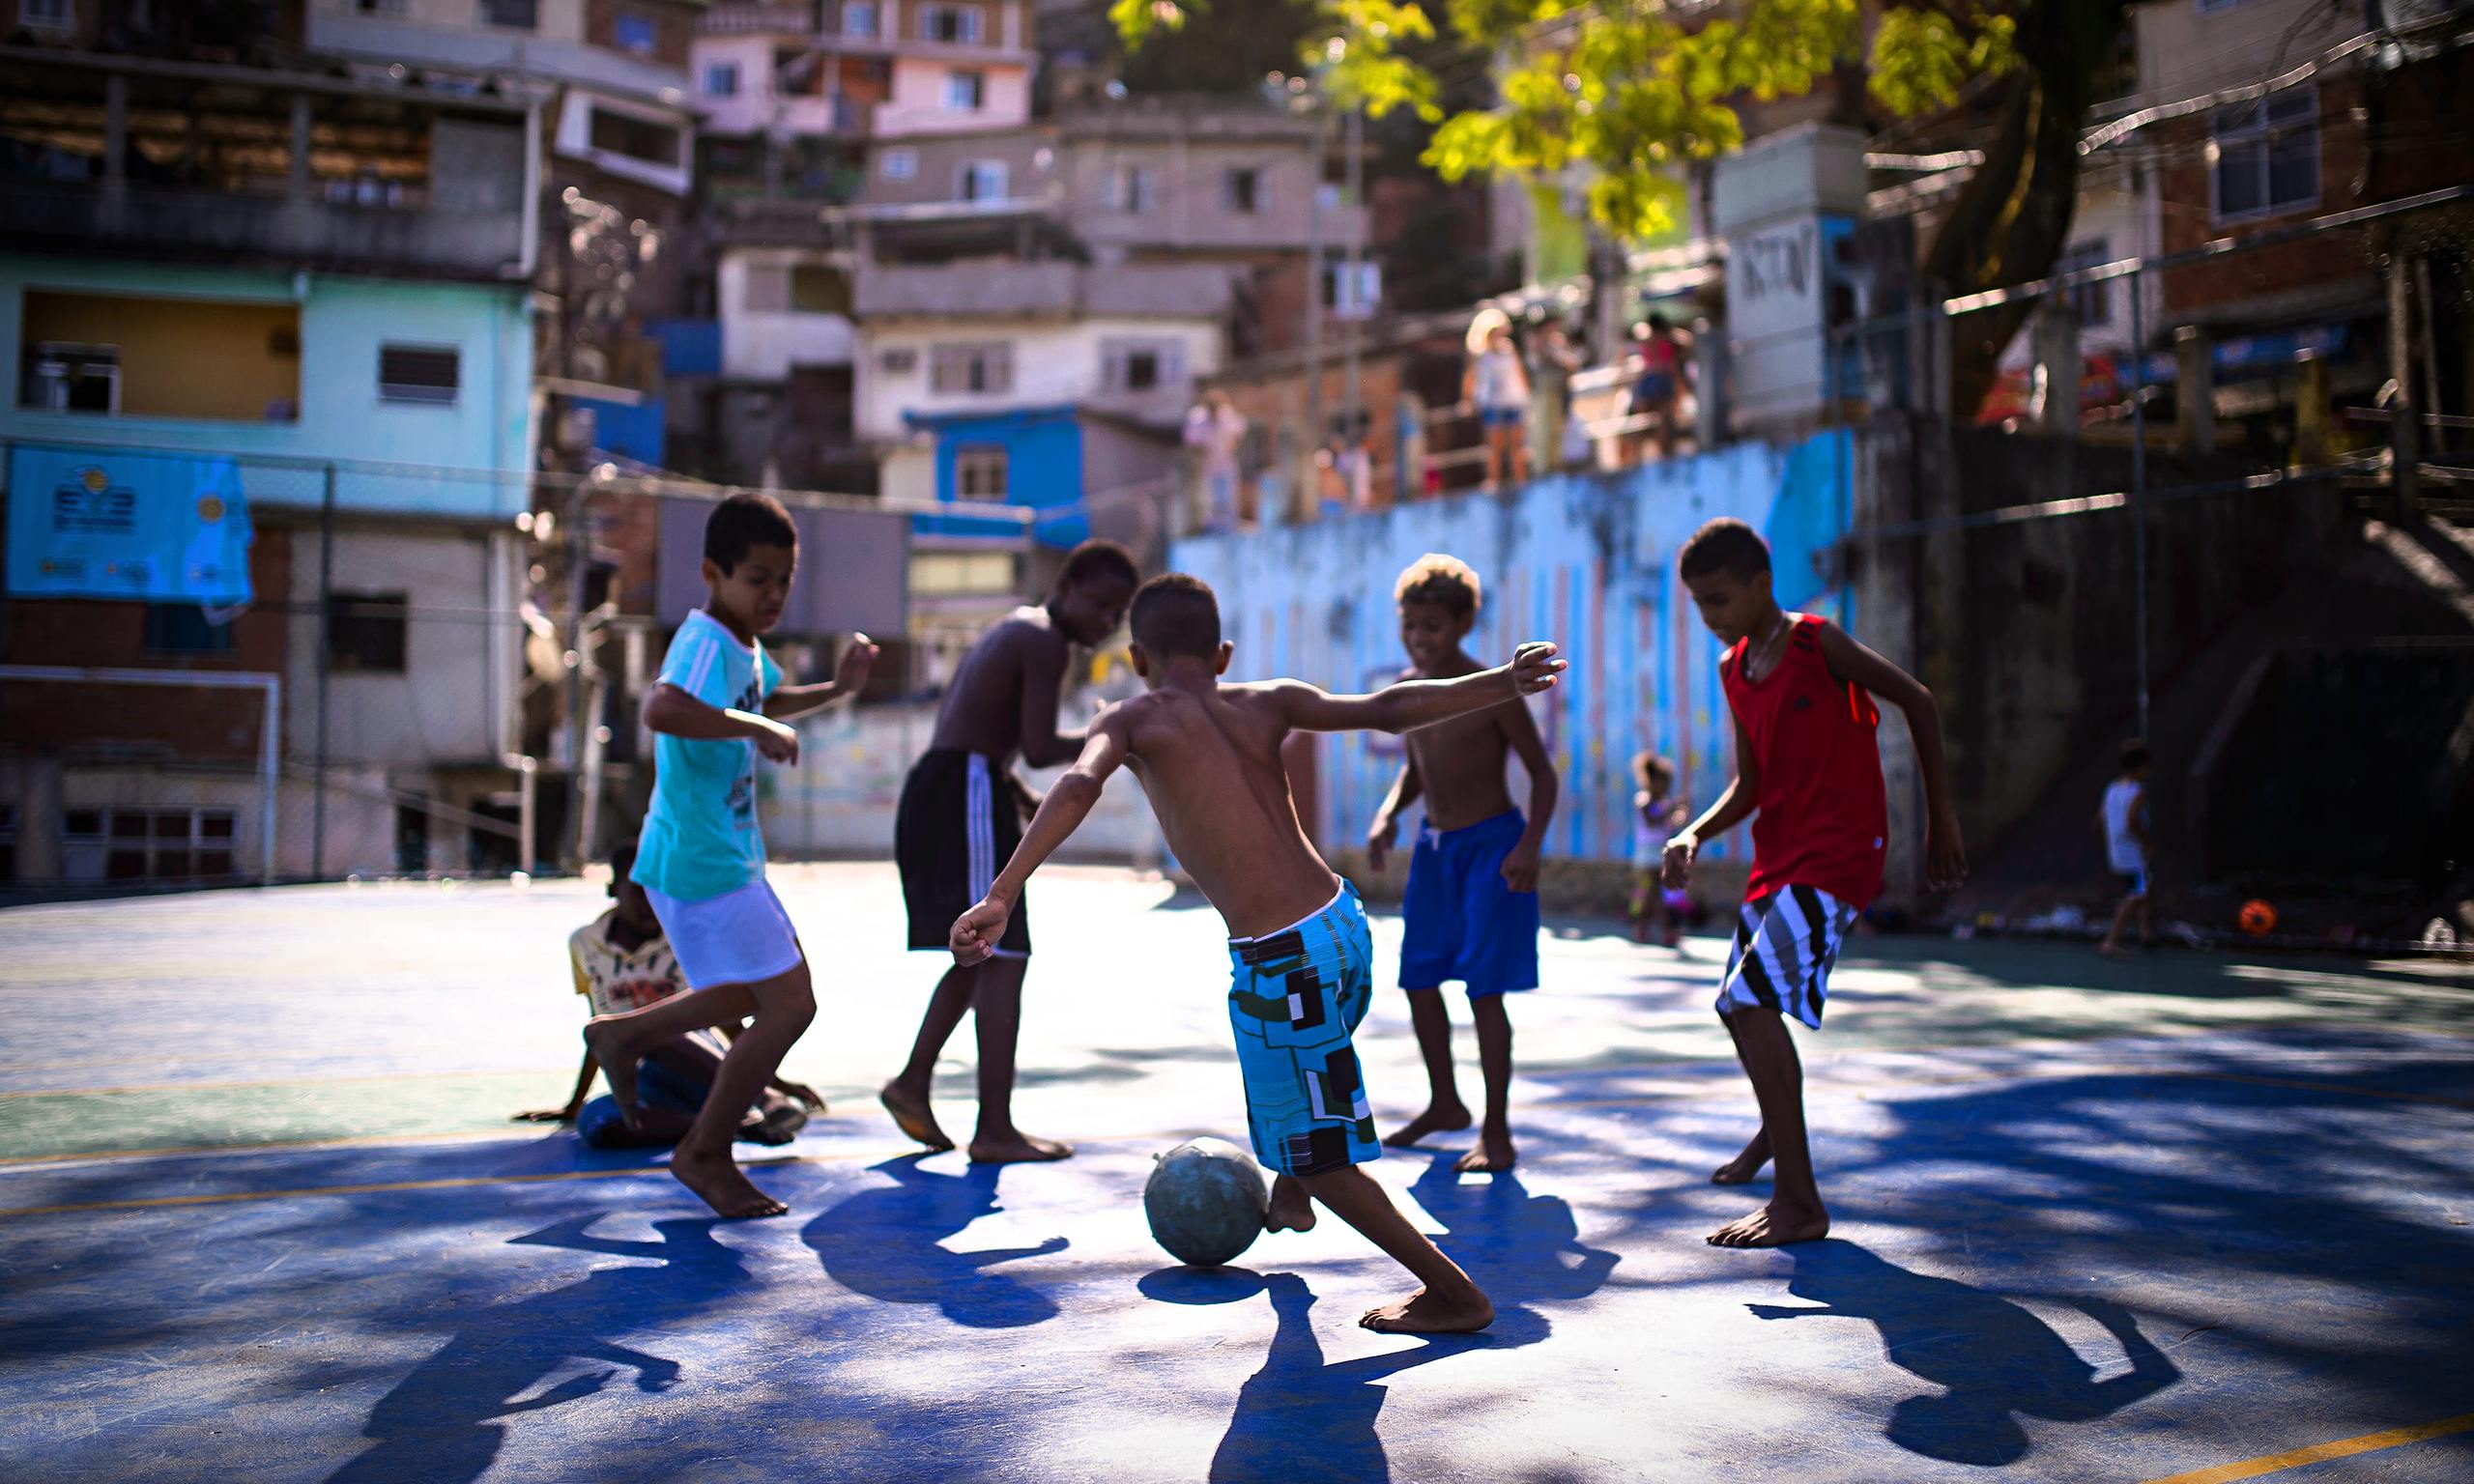 The Brazil favela staging its own World Cup - Soccer news - NewsLocker